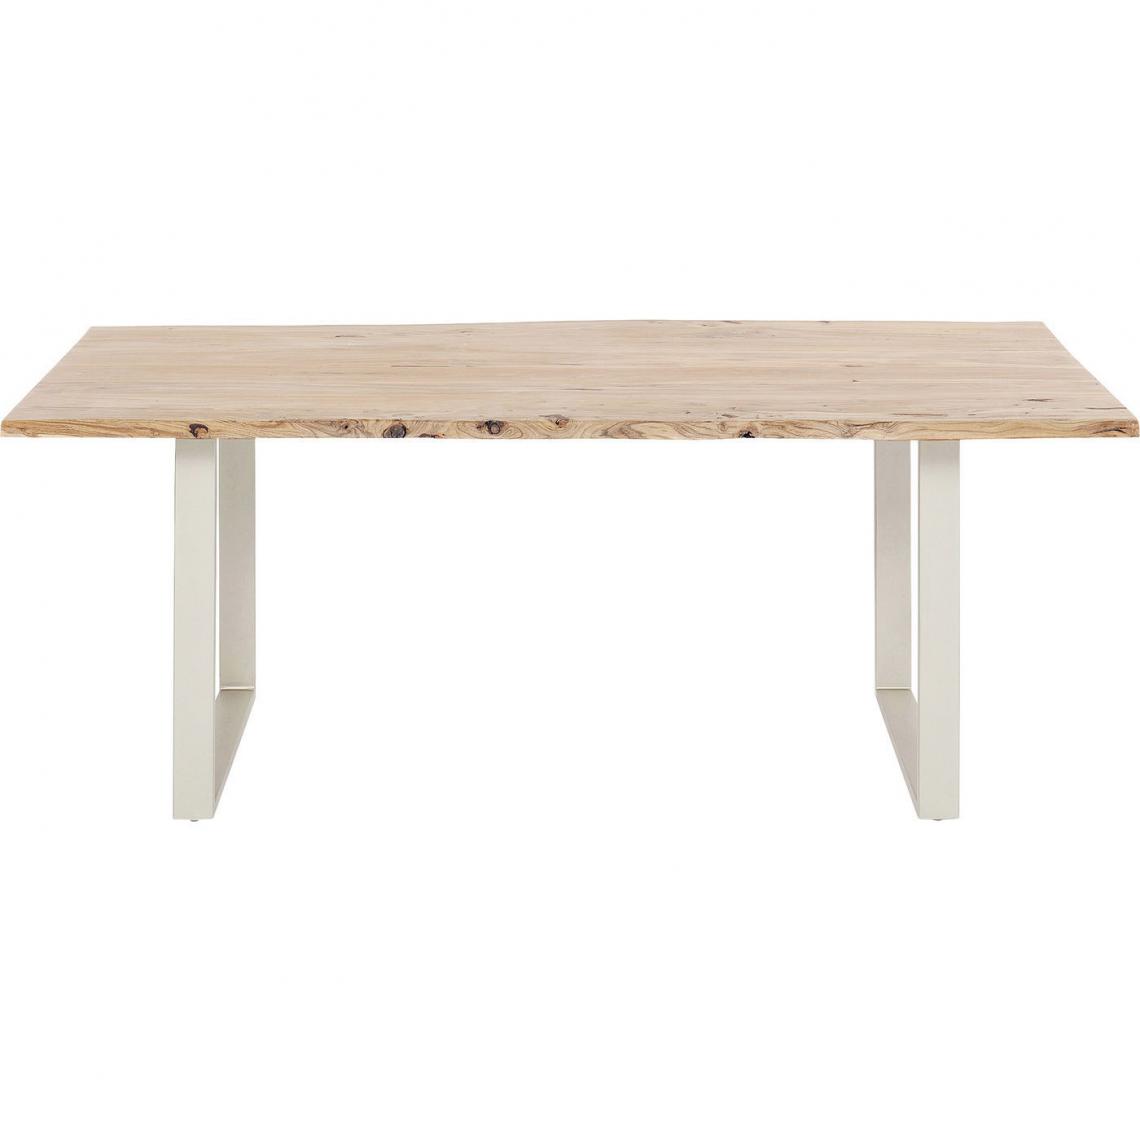 Karedesign - Table Harmony acacia argent 160x80cm Kare Design - Tables à manger